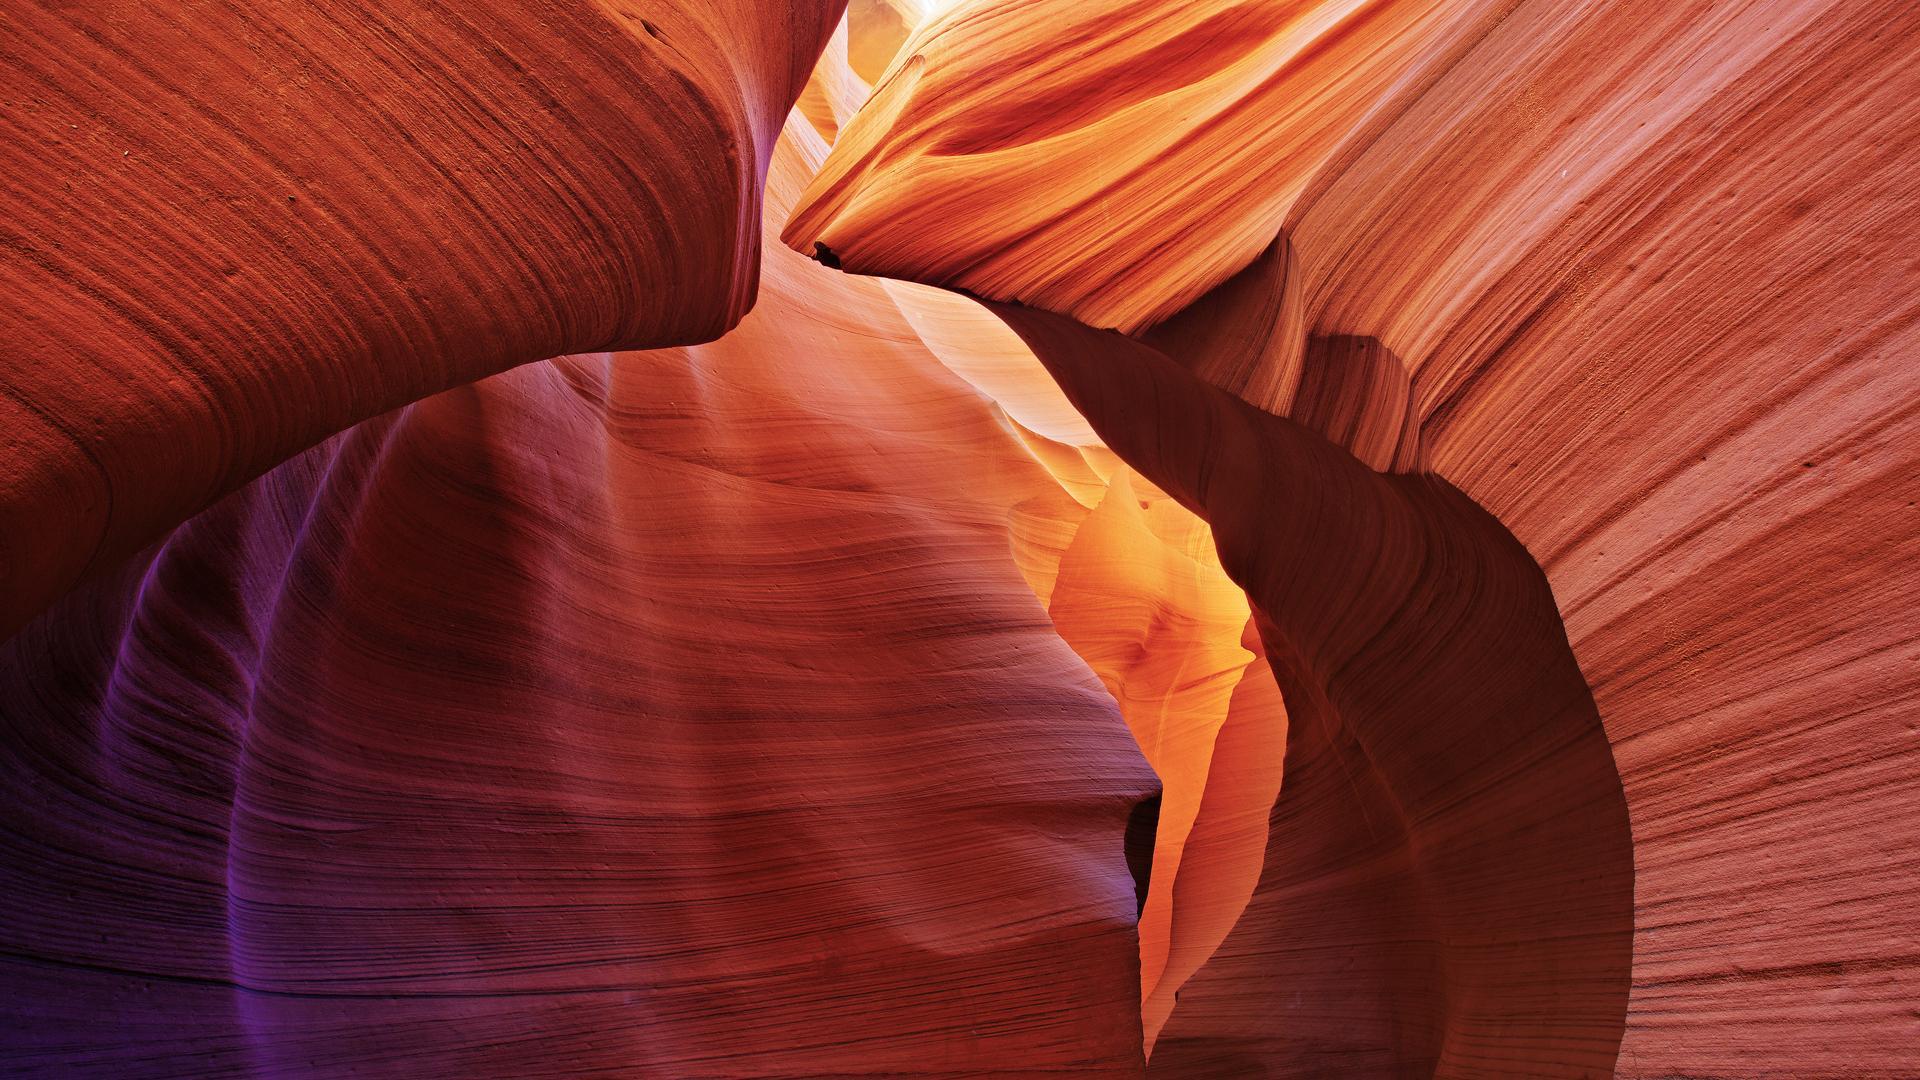 Red Rock Canyon Wallpaper 14 X 1080